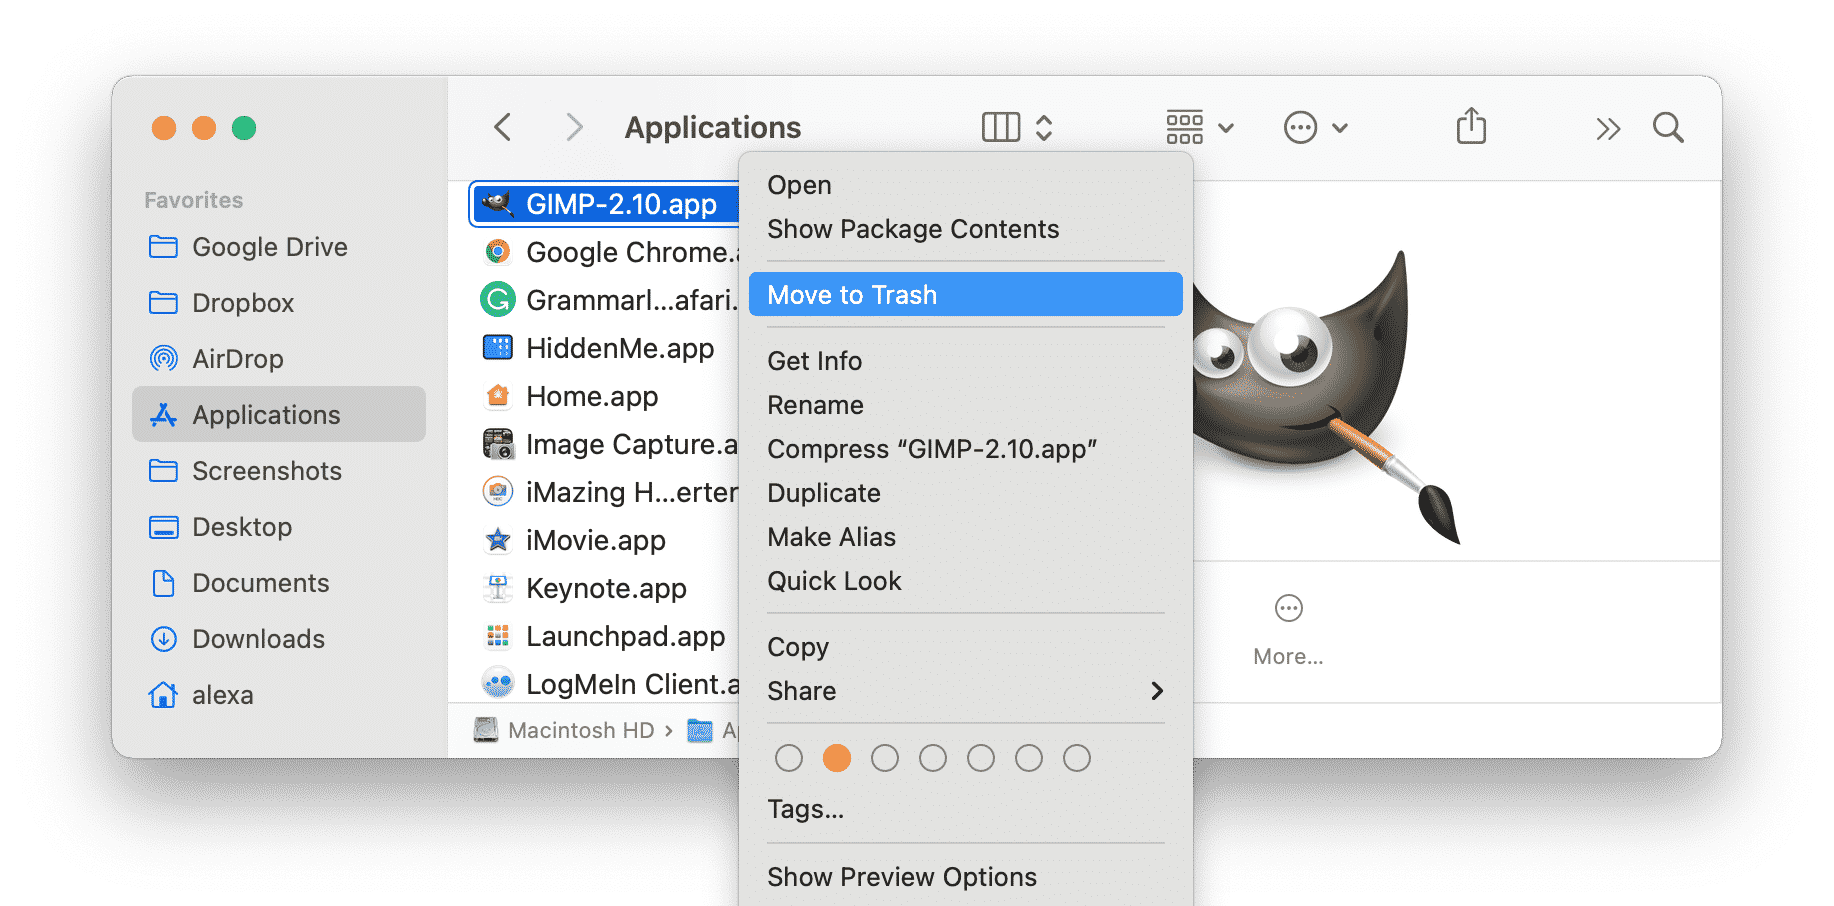 GIMP in the Applications folder